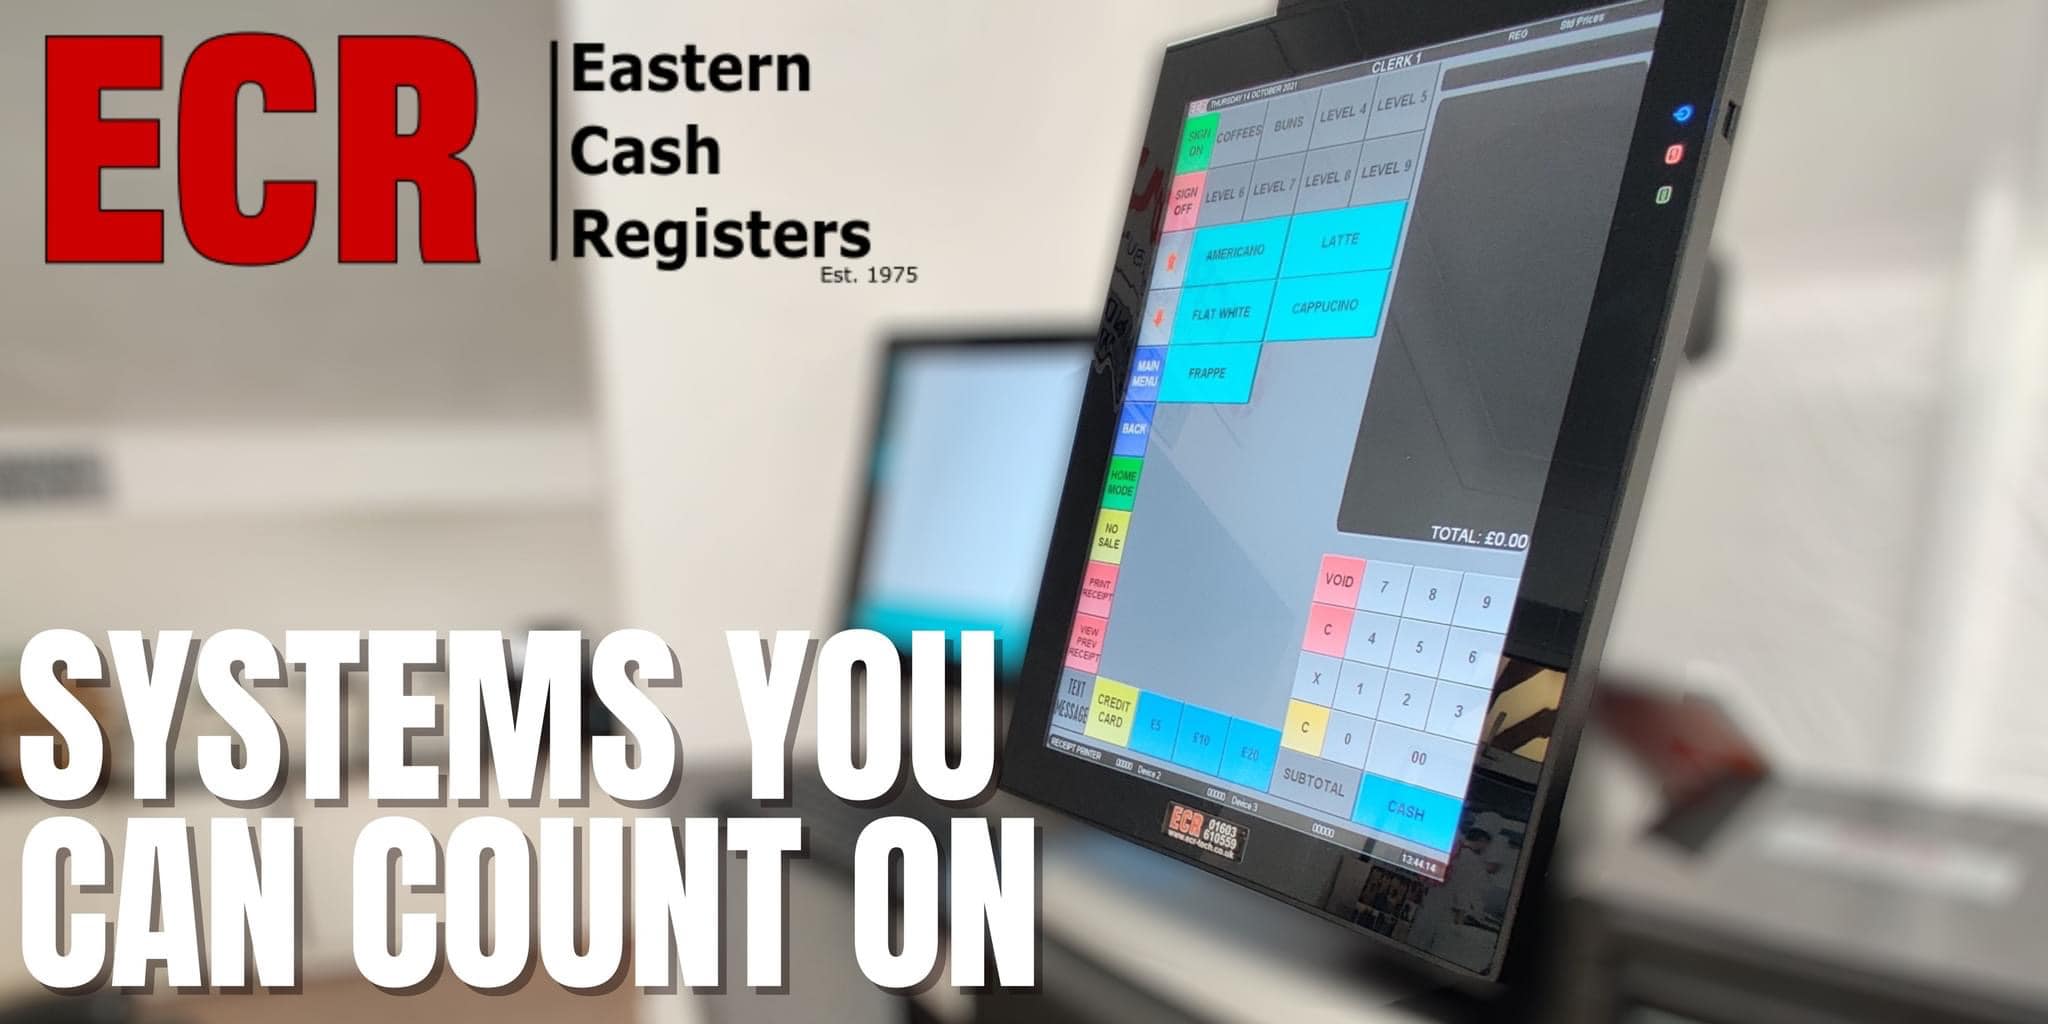 Eastern Cash Registers Ltd – New Job Opportunity …